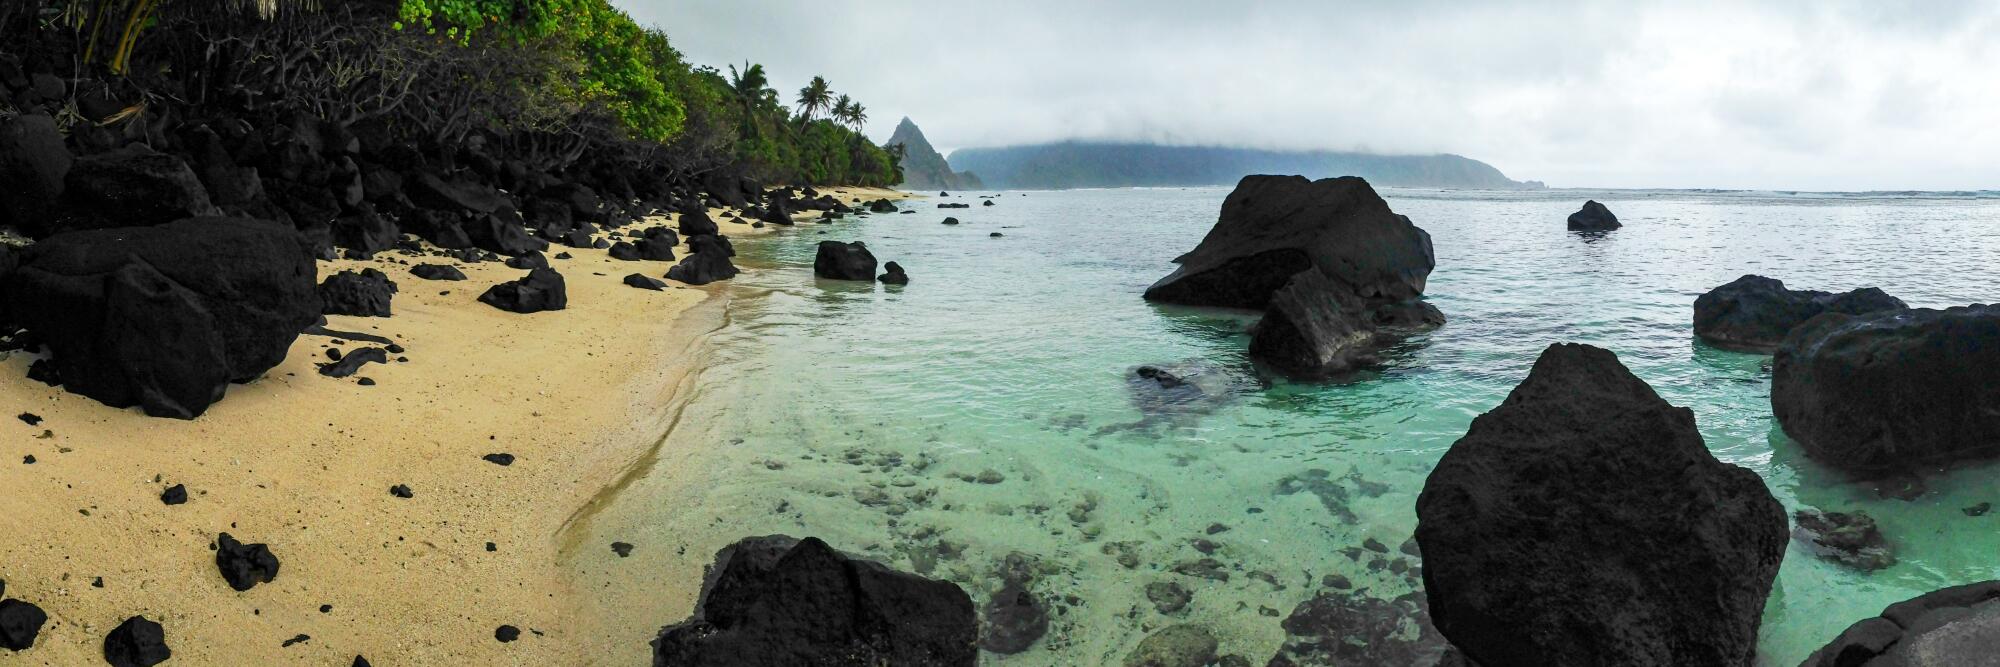 Ofu Beach, American Samoa, with palm trees, sandy area, big rocks and clear water.